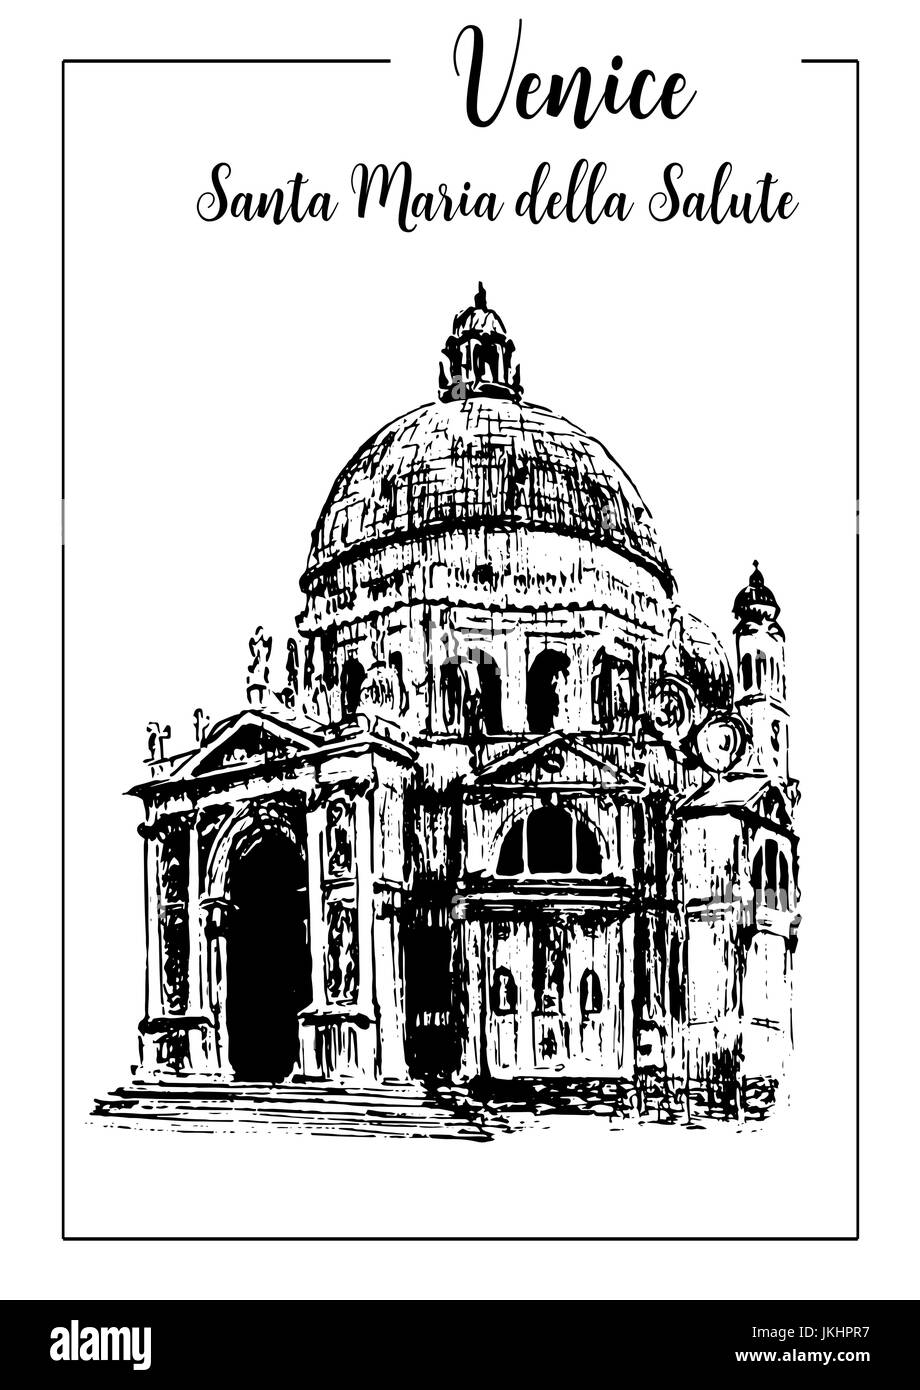 Santa Maria della Salute.Venise. croquis vecteur Illustration de Vecteur